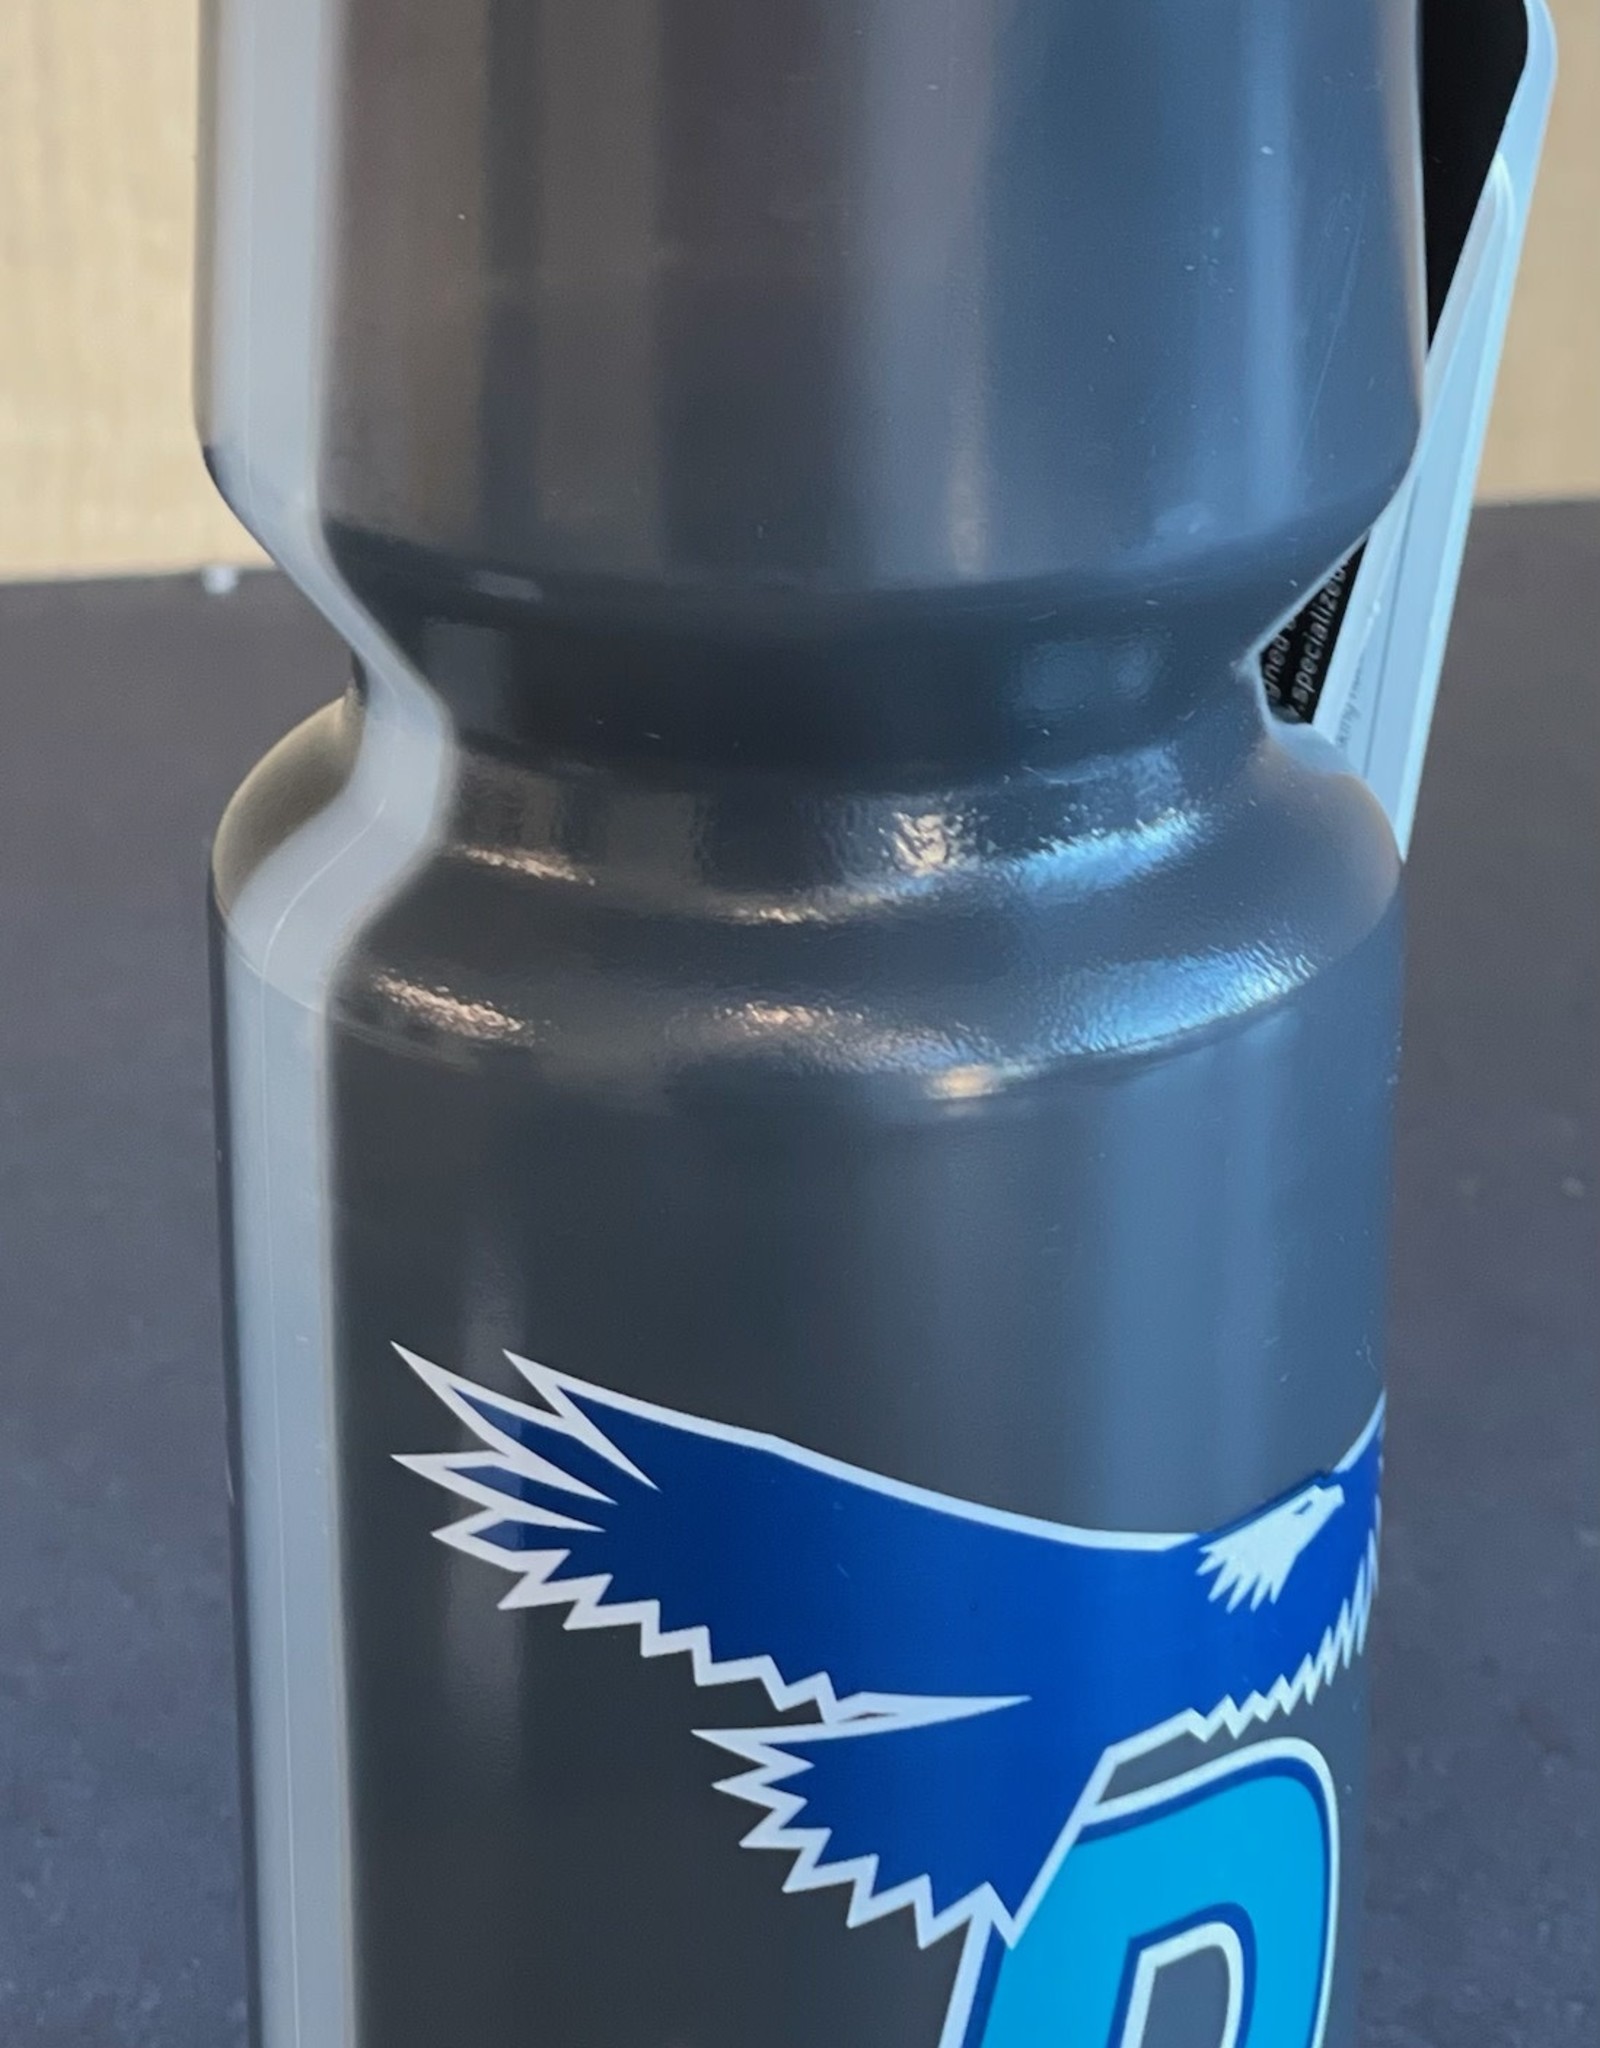 NON-UNIFORM JD Water bottle, gray with blue cap